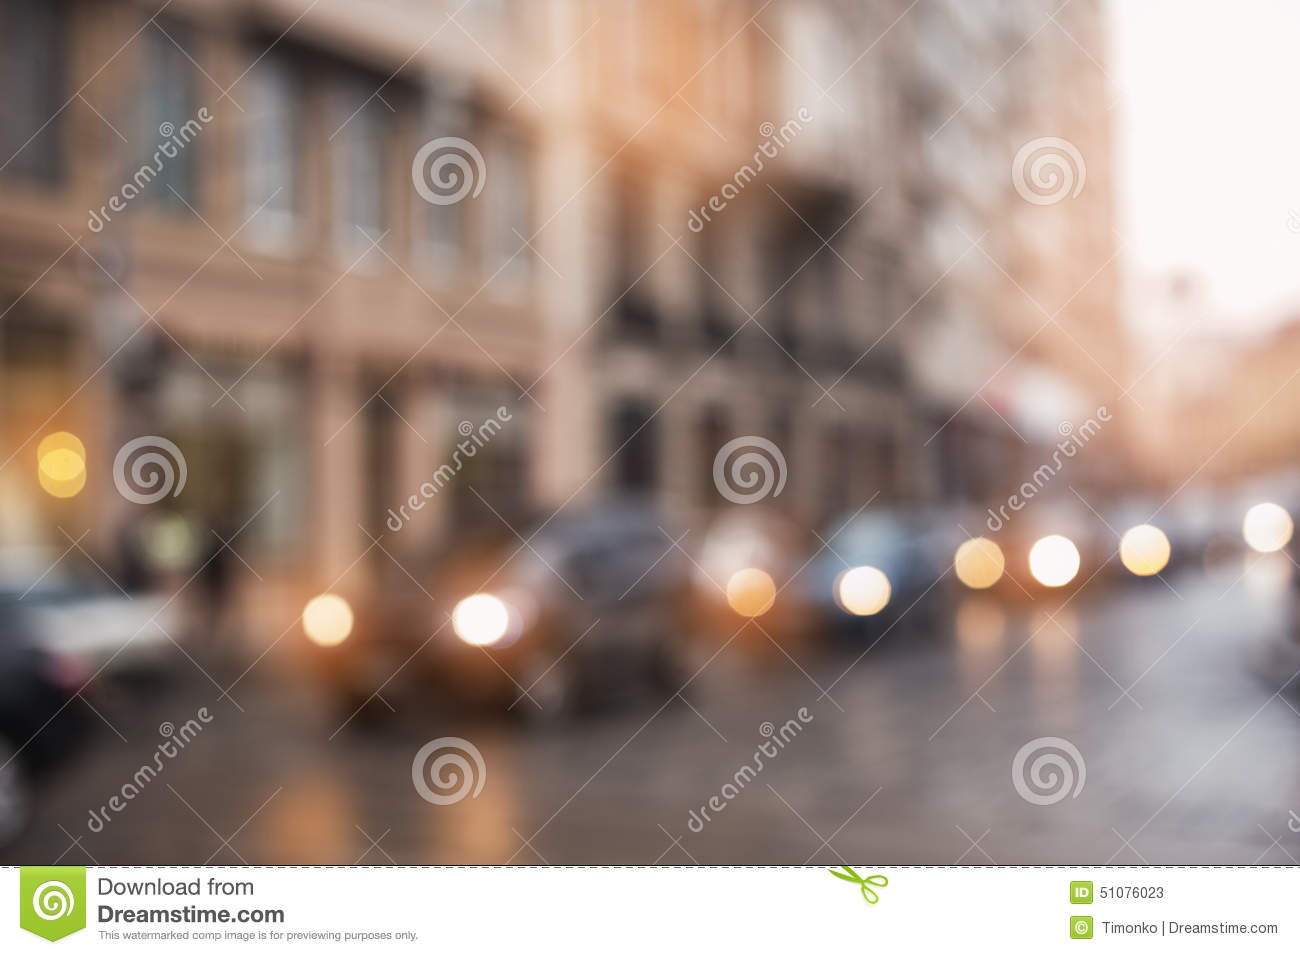 background-blur-city-streets-focus-51076023.jpg